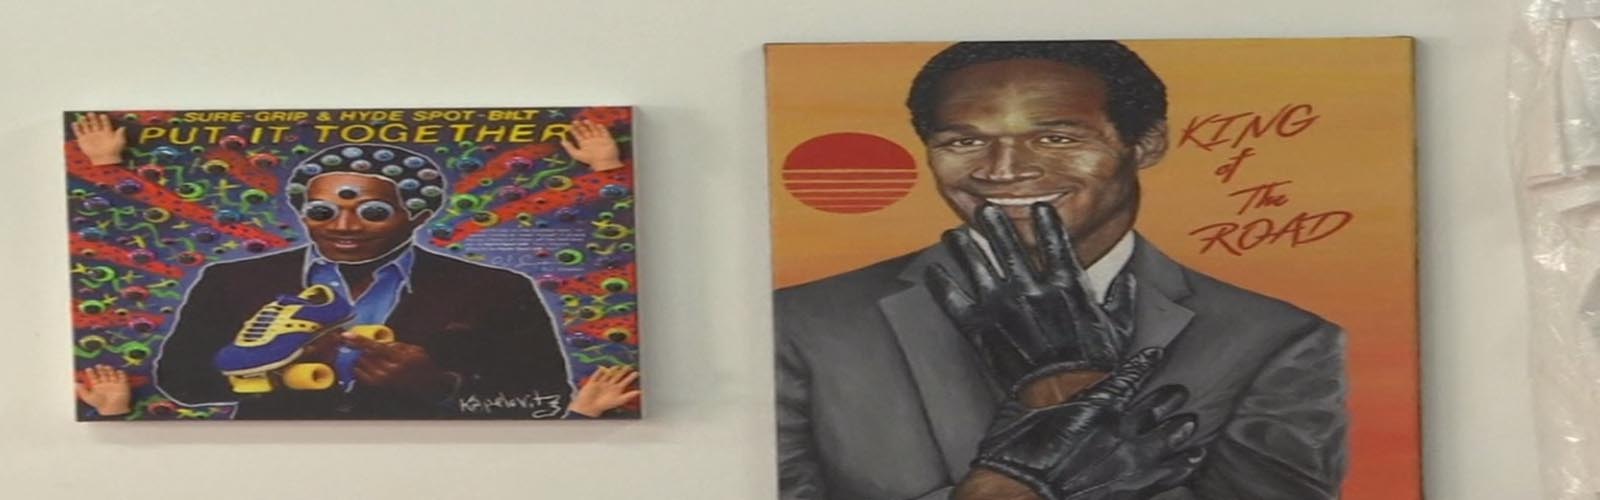 O.J. Simpson LA exhibit shows memorabilia as art